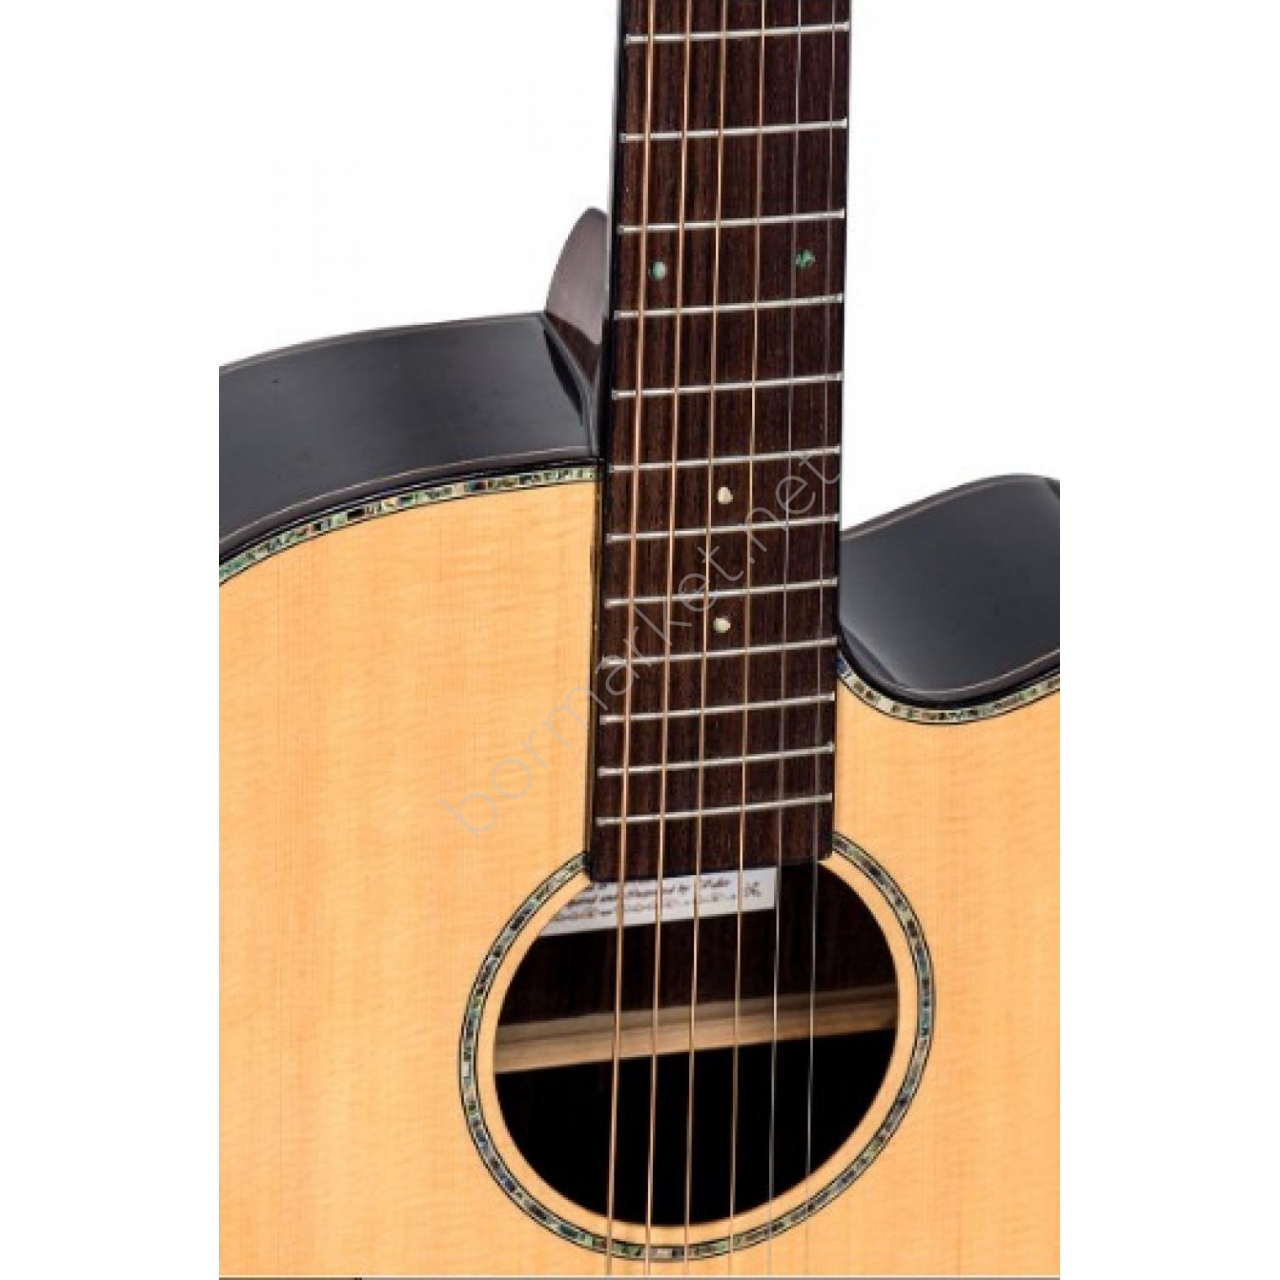 Valler VA555 Solid Top Cutaway Parlak Cilalı Akustik Gitar